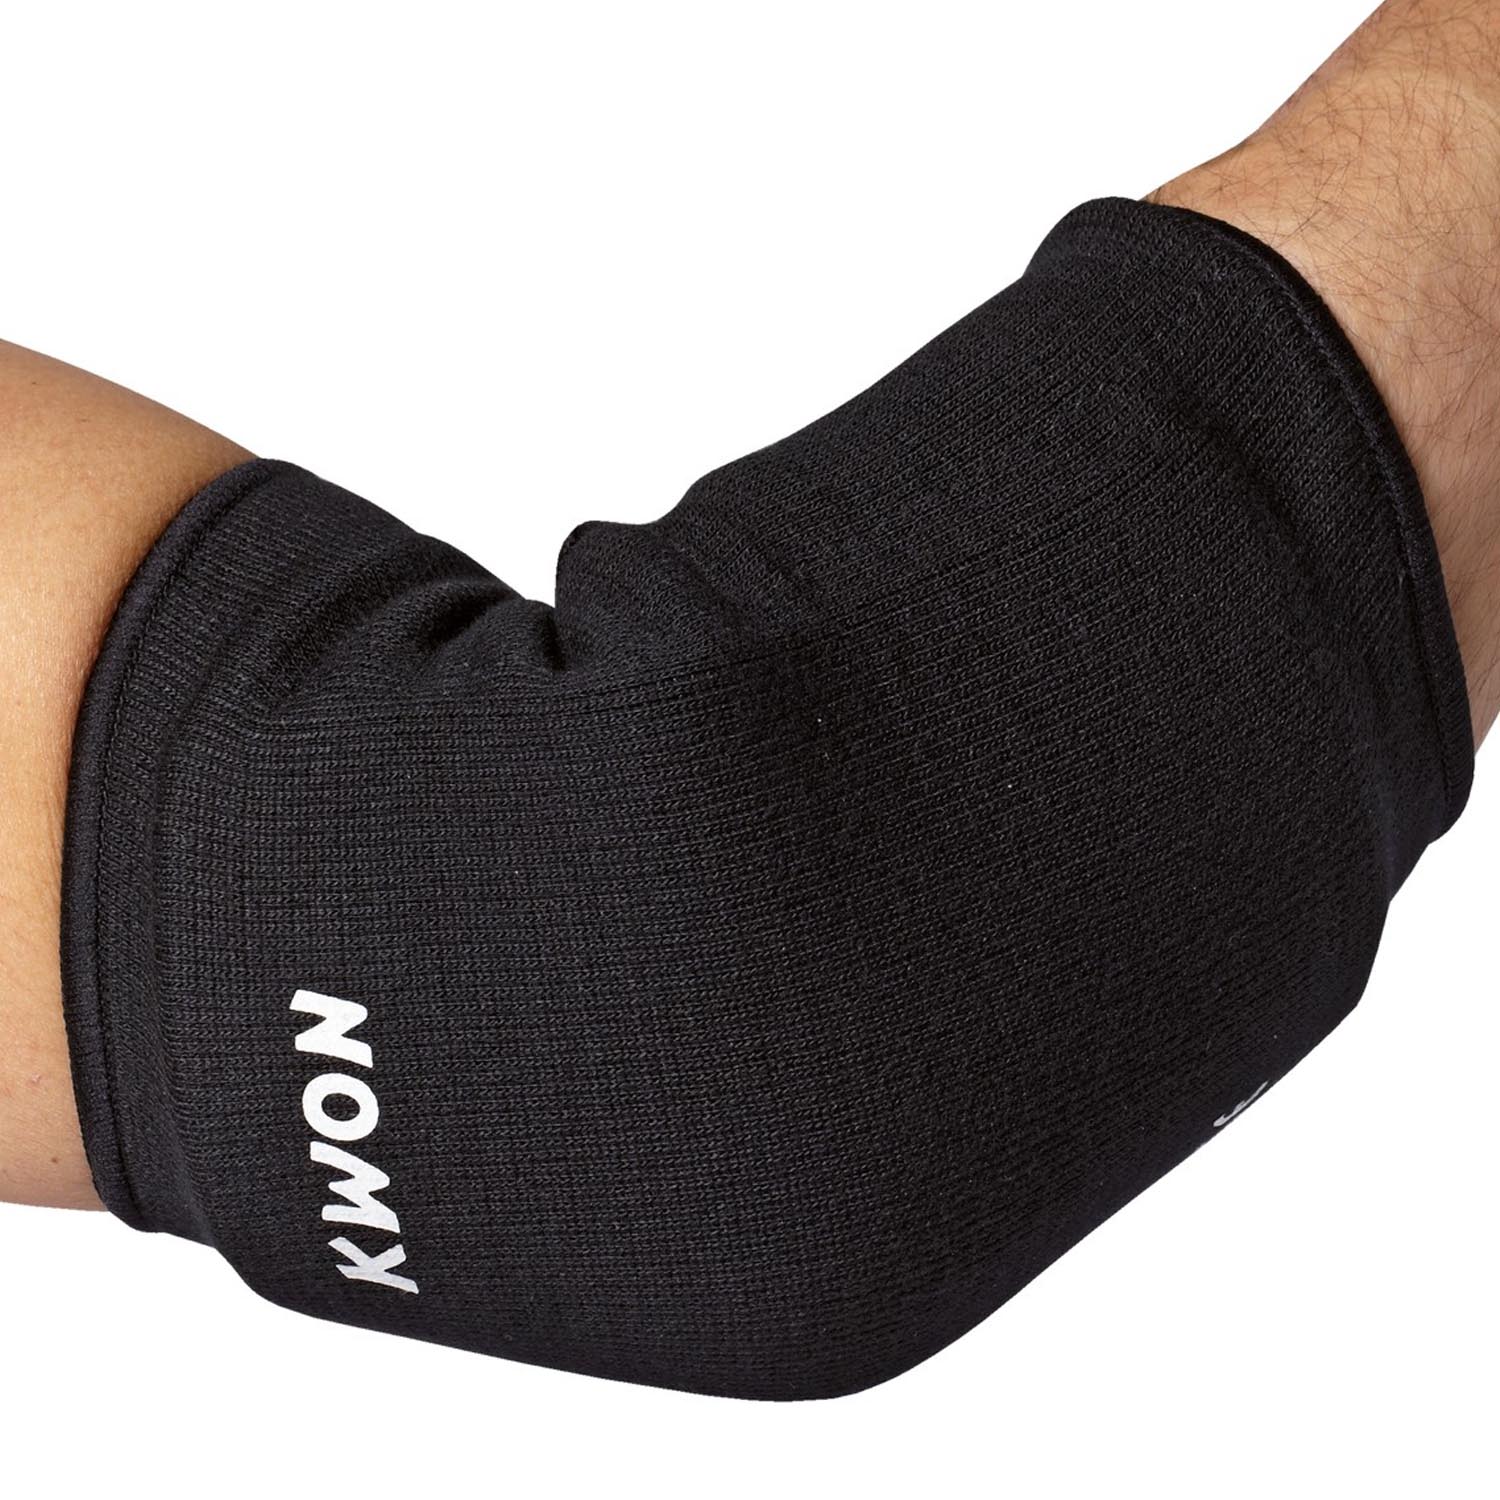 KWON Elbowprotection, black, M